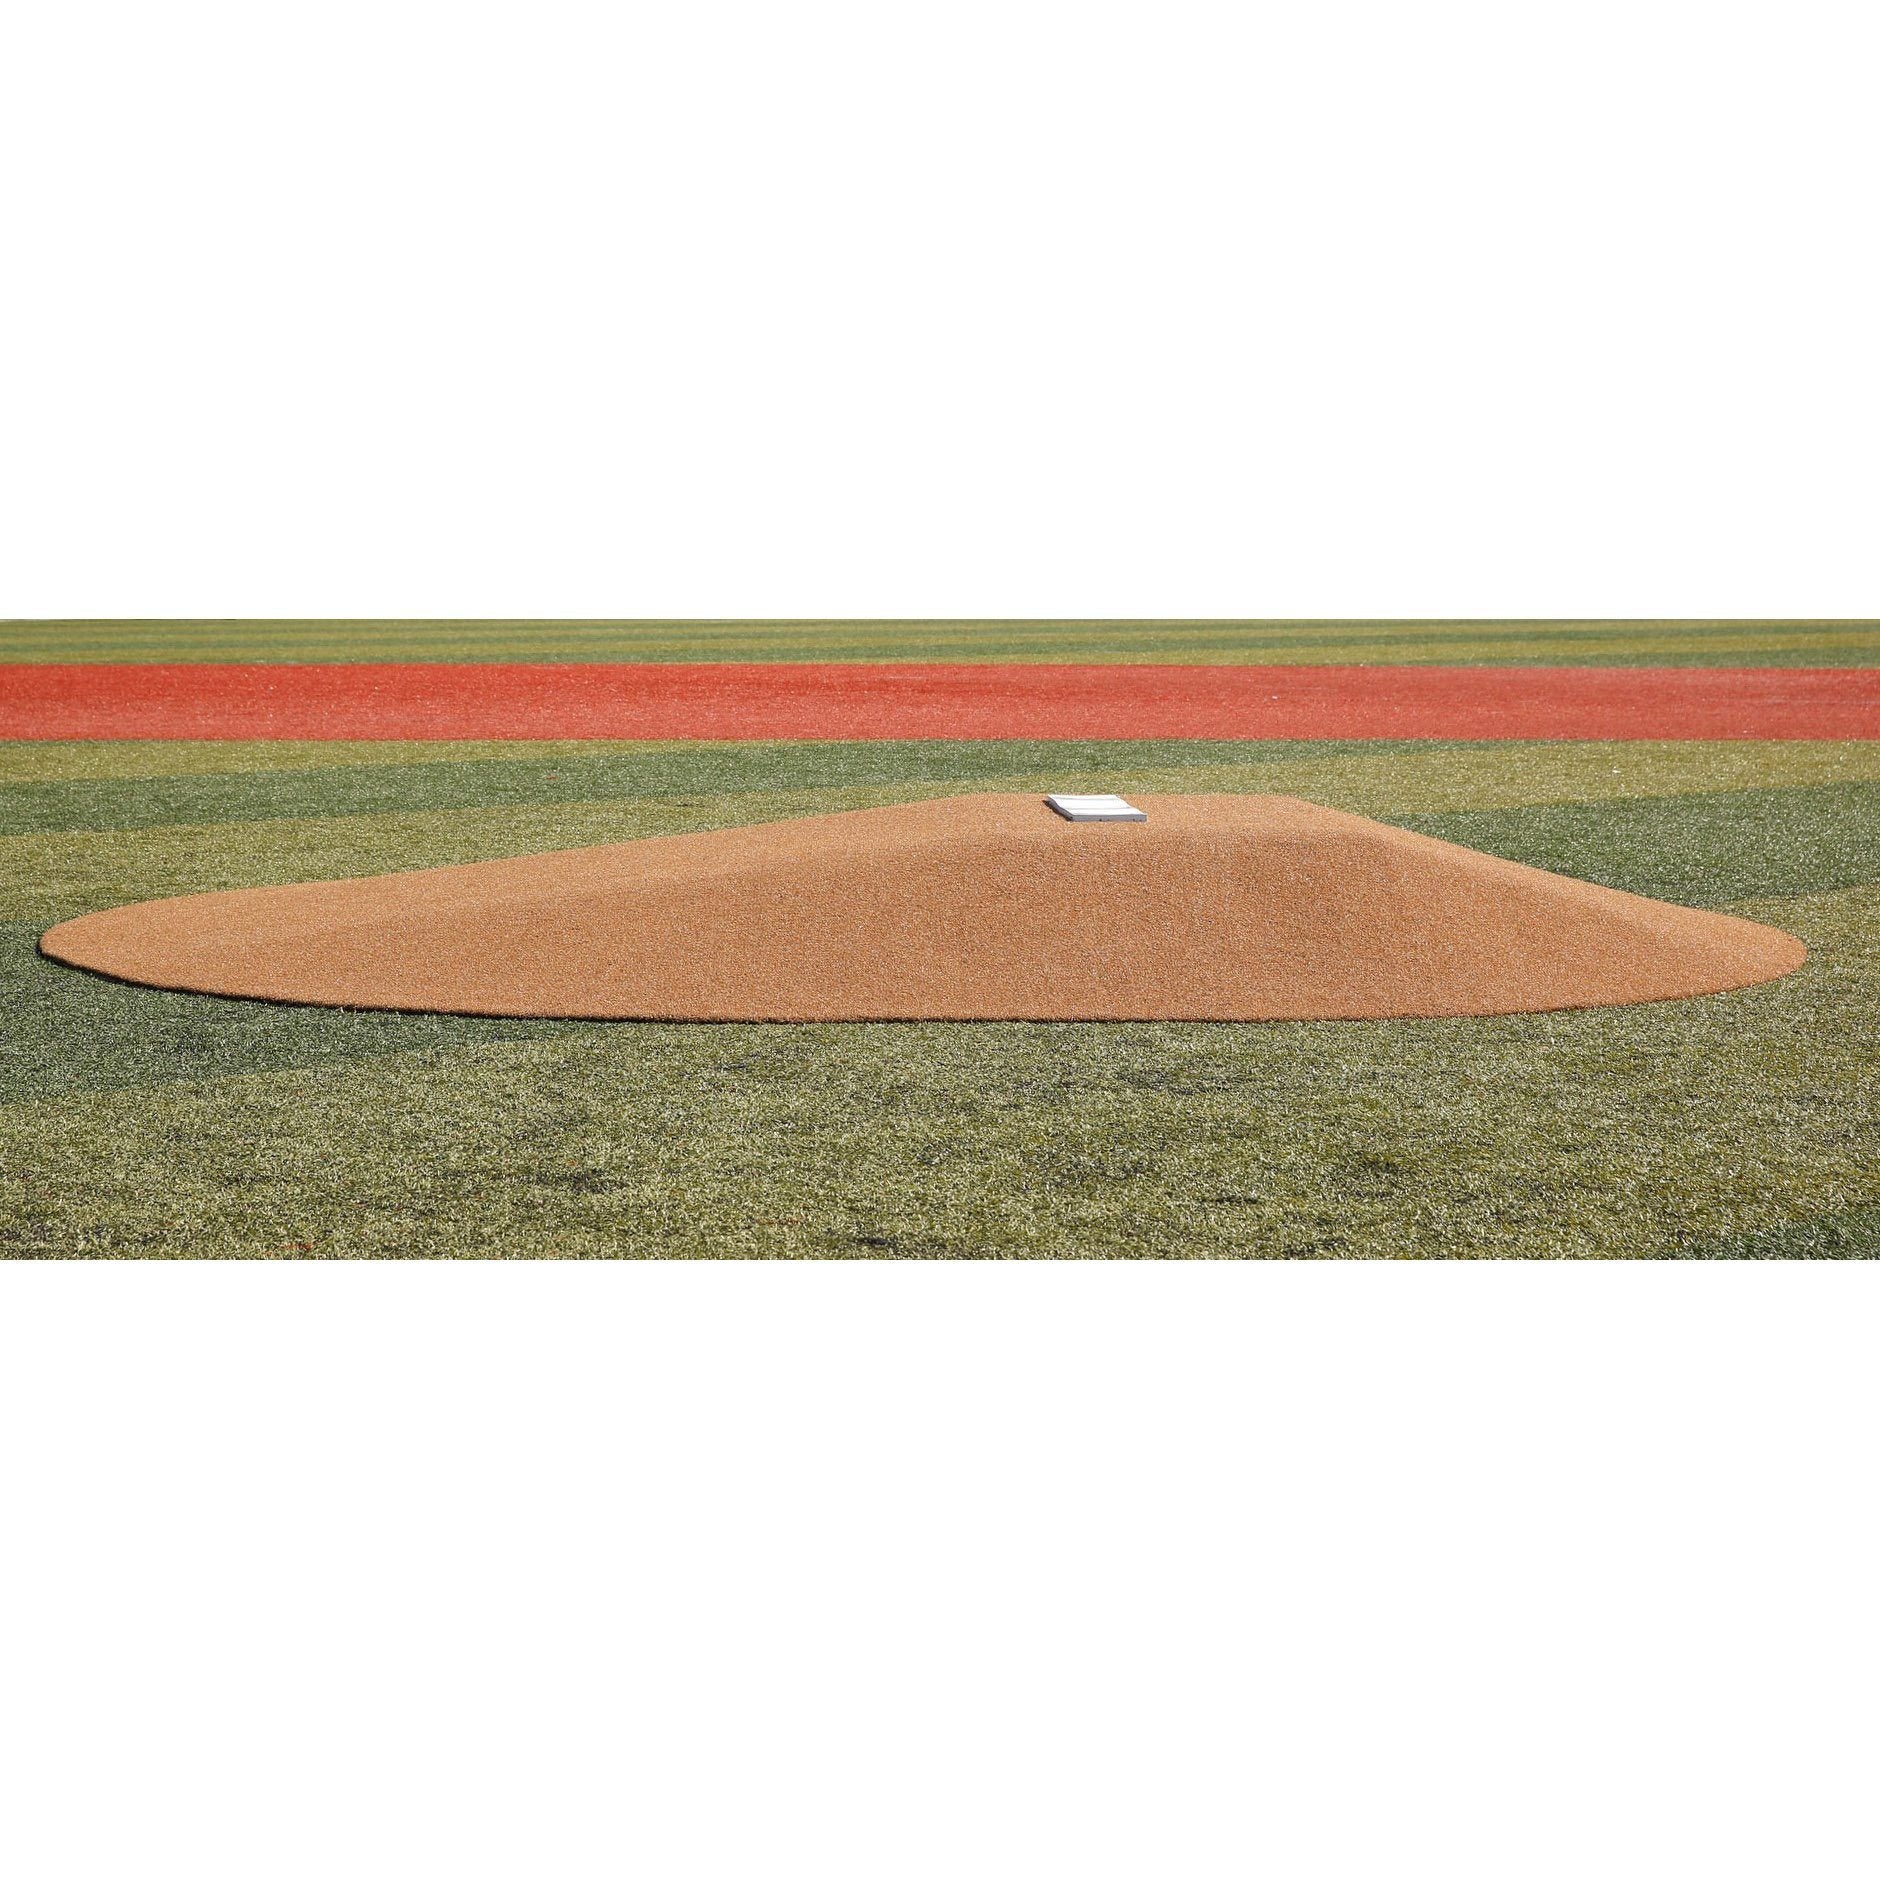 Arizona Mound Company 10" Little League Portable Game Pitching Mound - Pitch Pro Direct